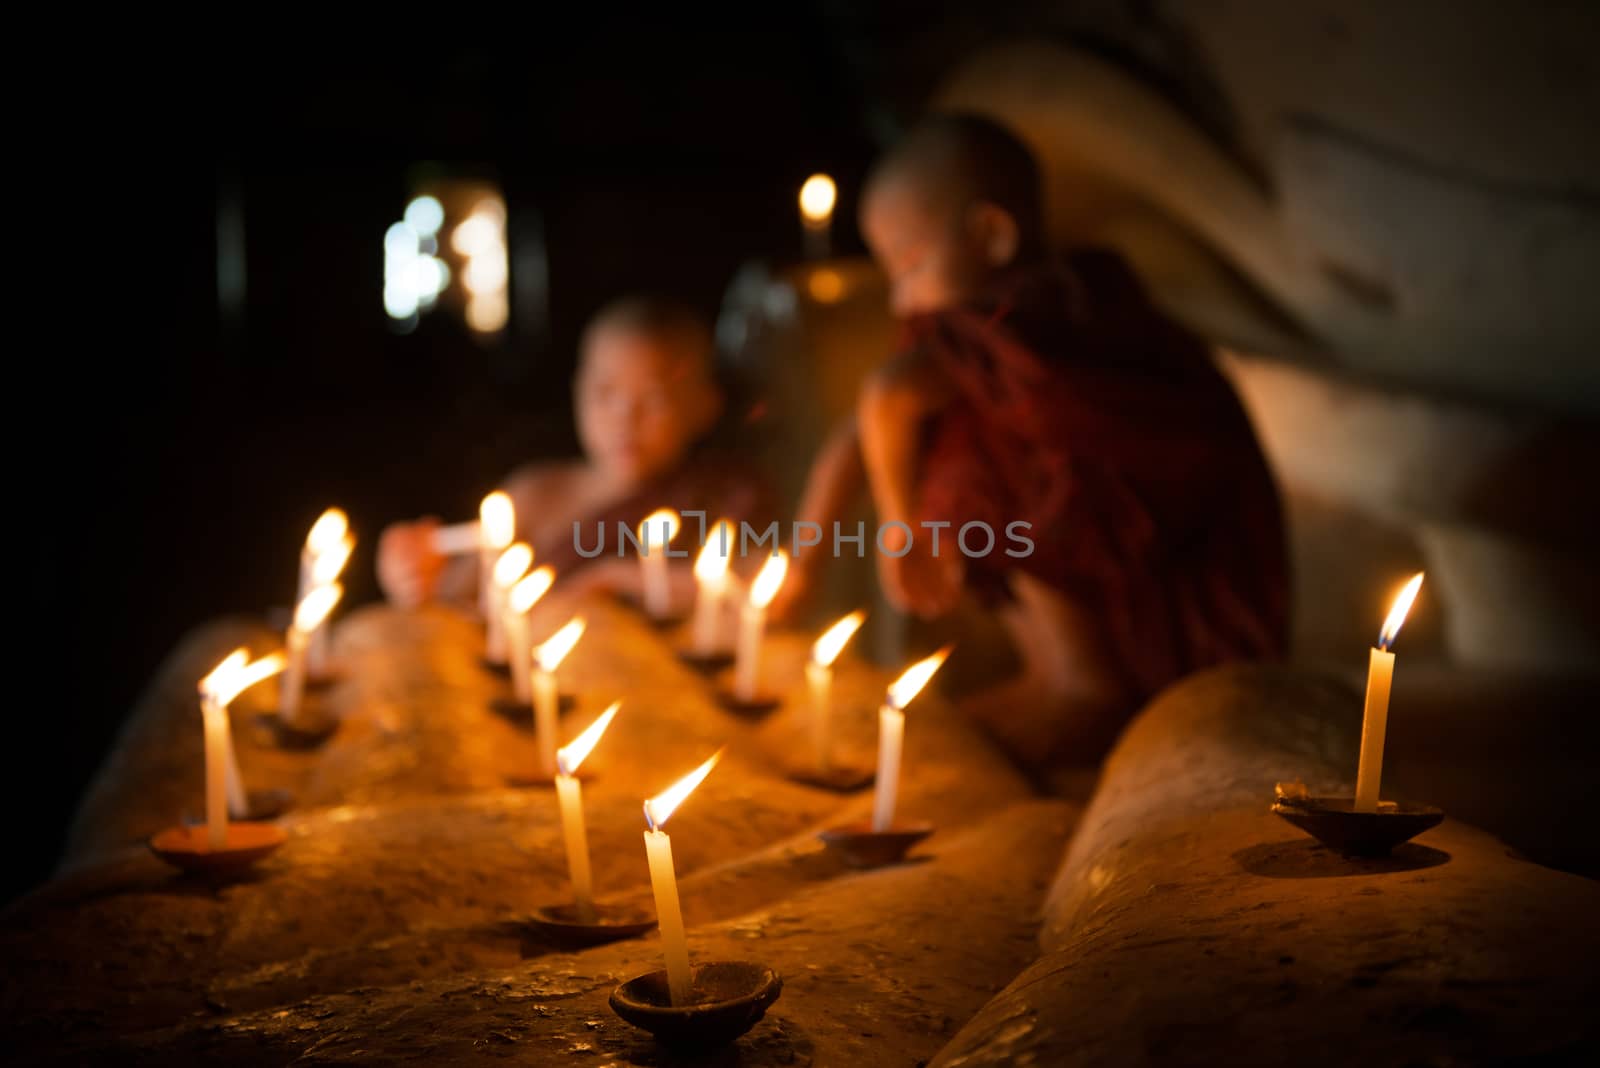 Little novice monks hand holding candlelight inside temple, Bagan, Myanmar.